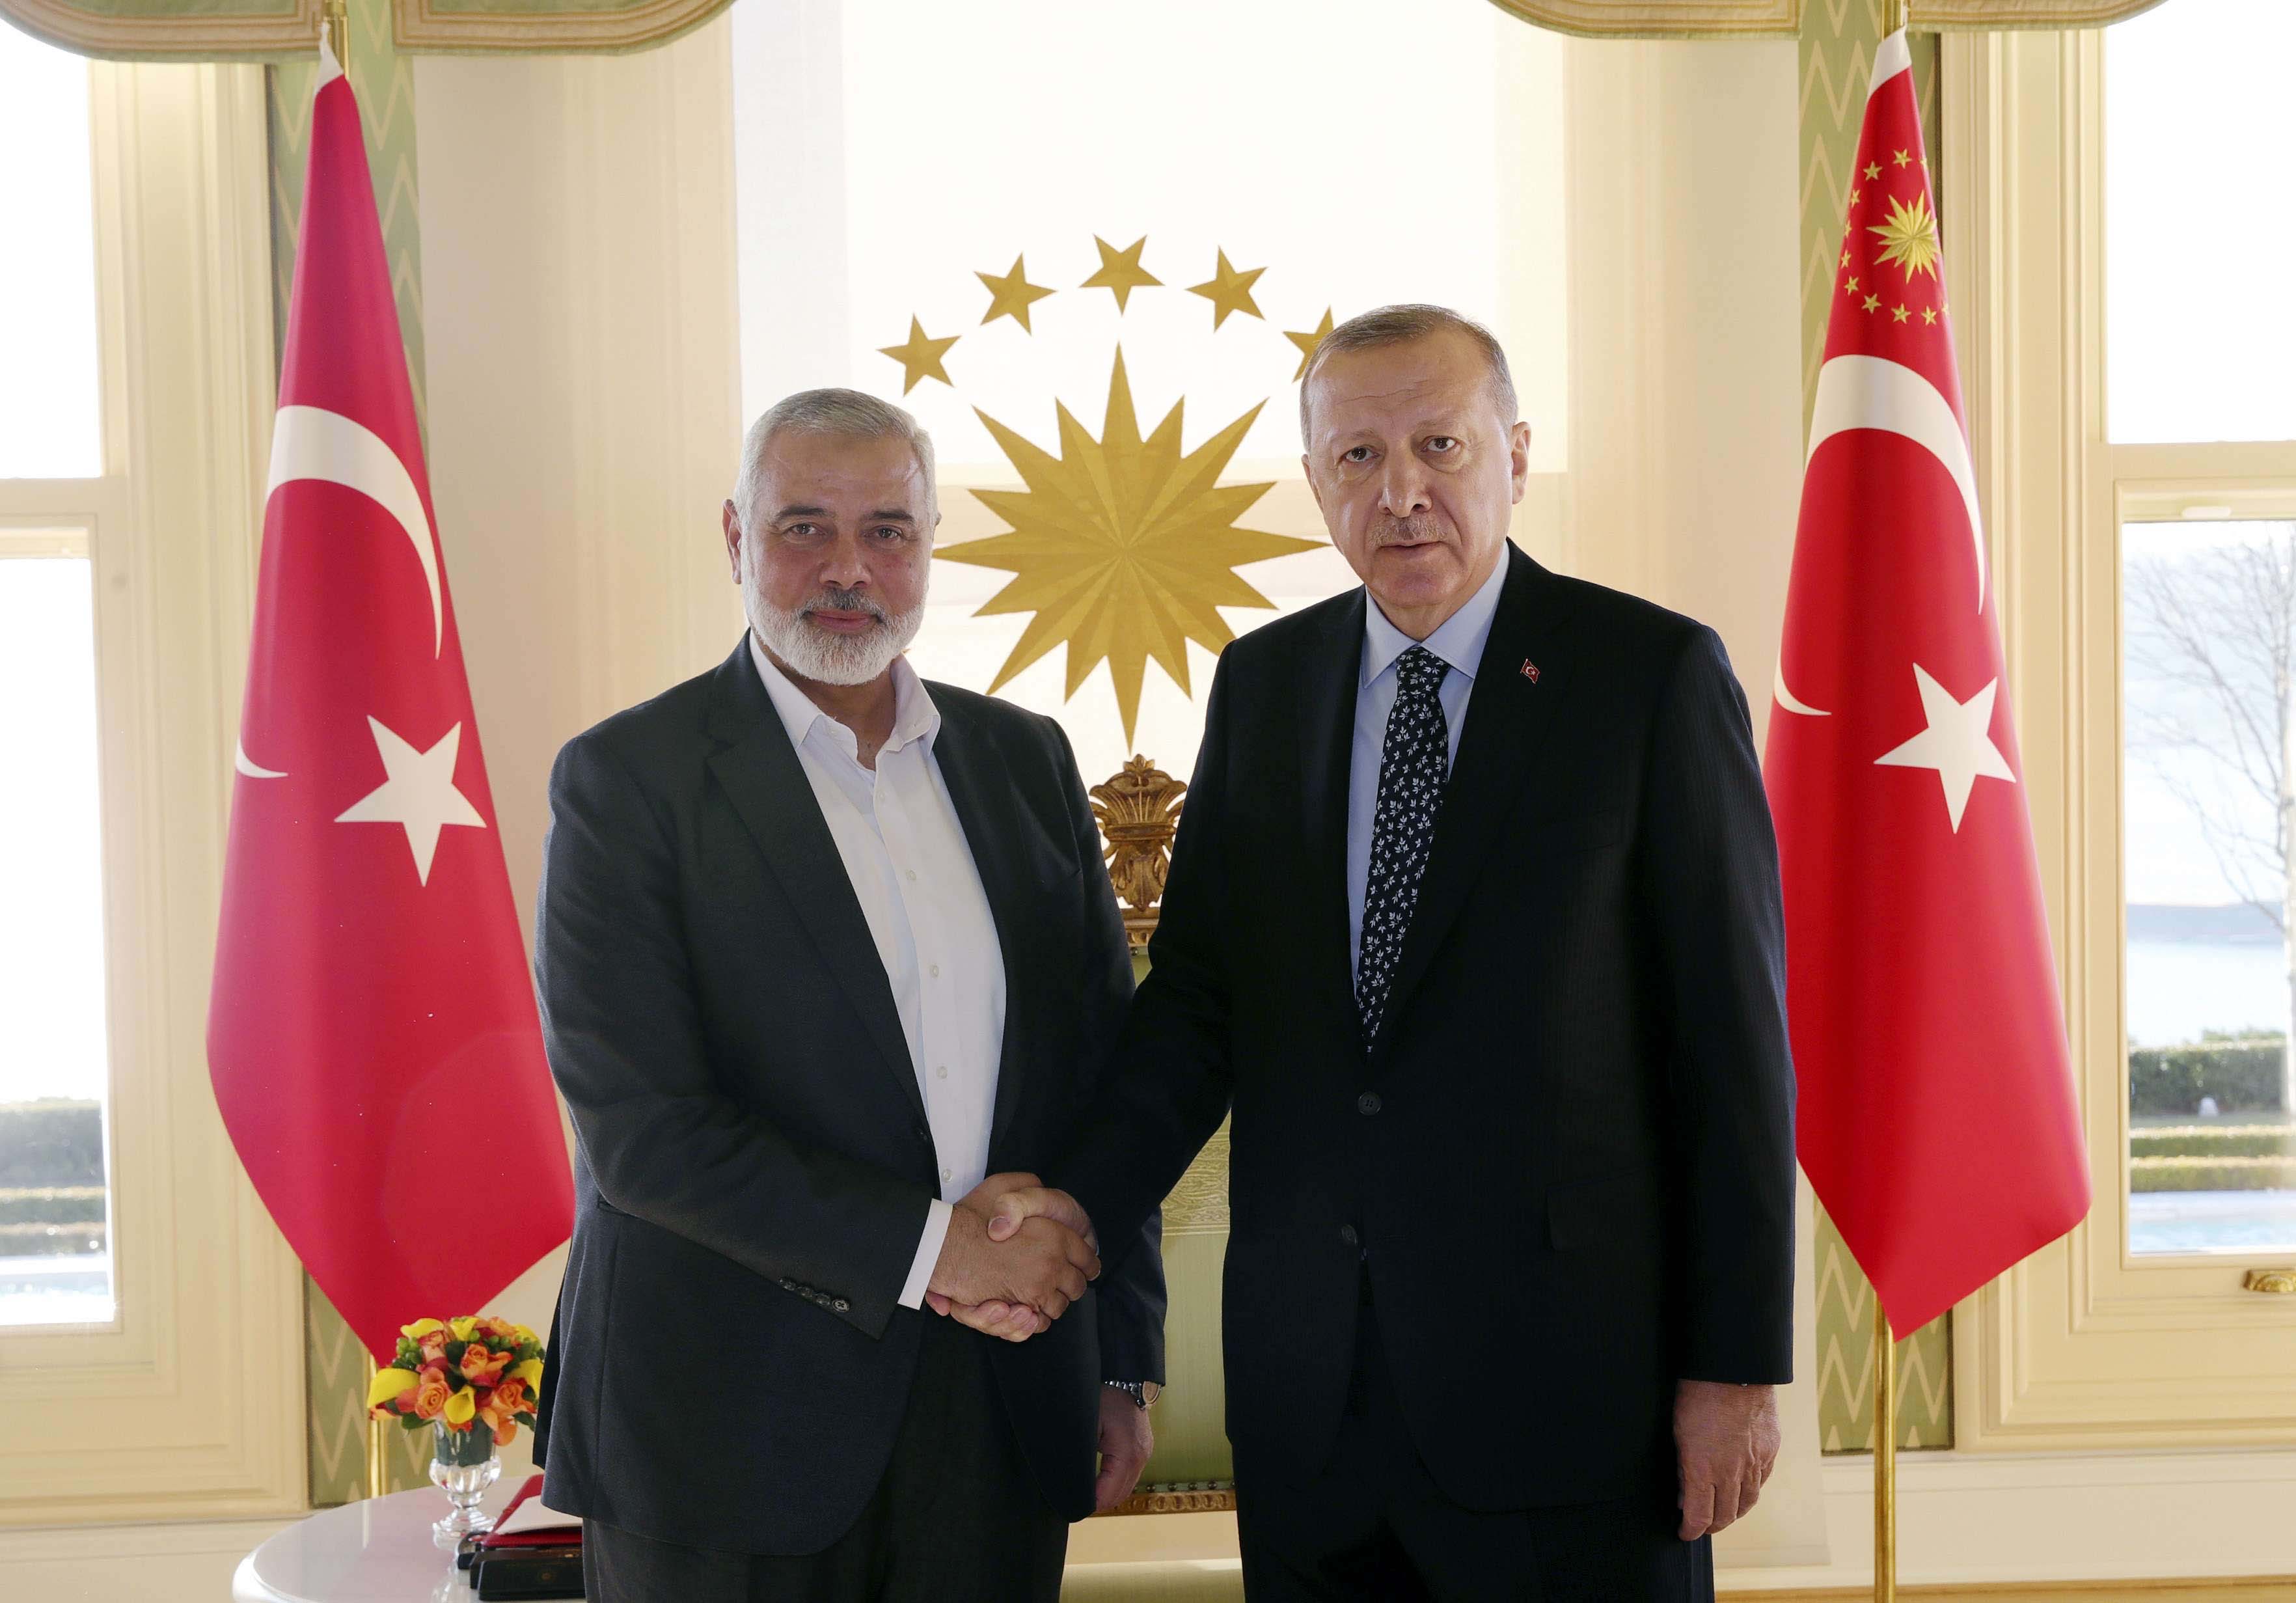 urkey's President Recep Tayyip Erdogan, right, shakes hands with Hamas movement chief Ismail Haniyeh